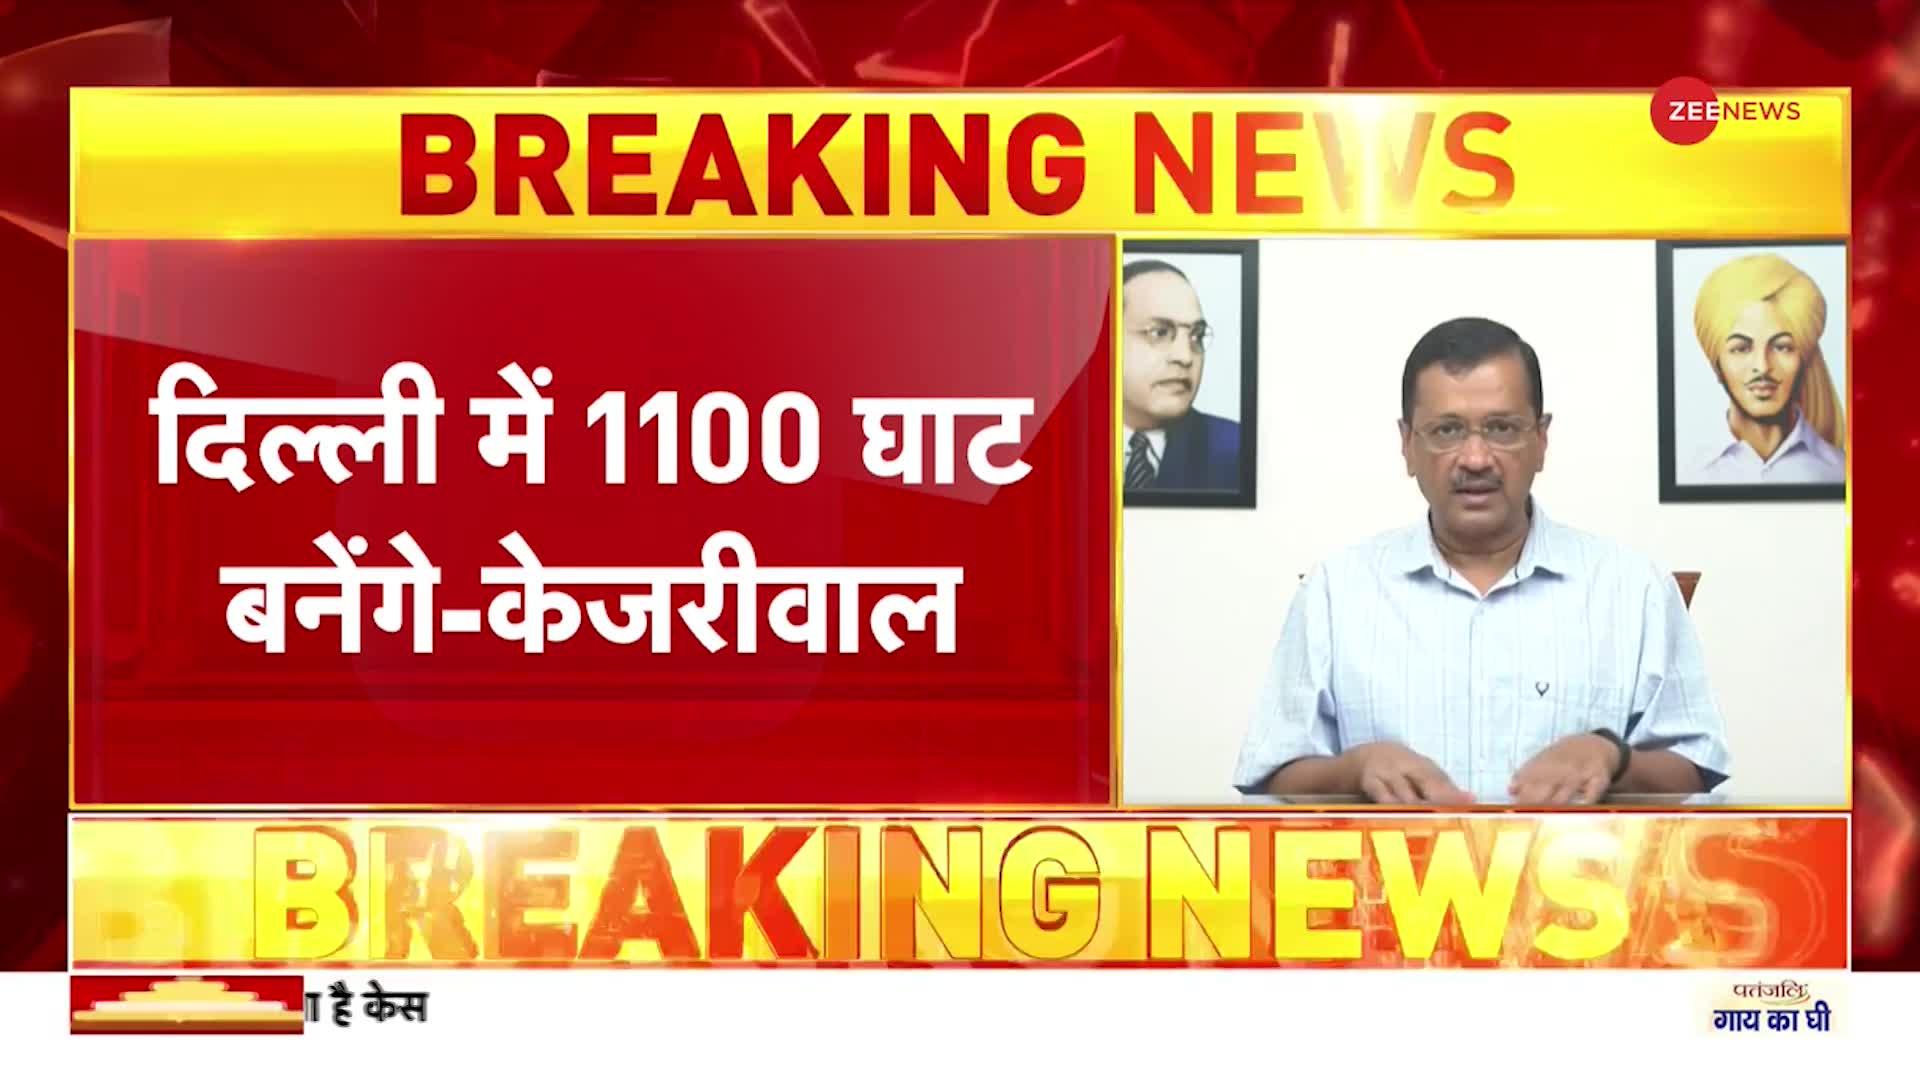 दिल्ली सरकार छठ के लिए बनाएगी 1100 घाट